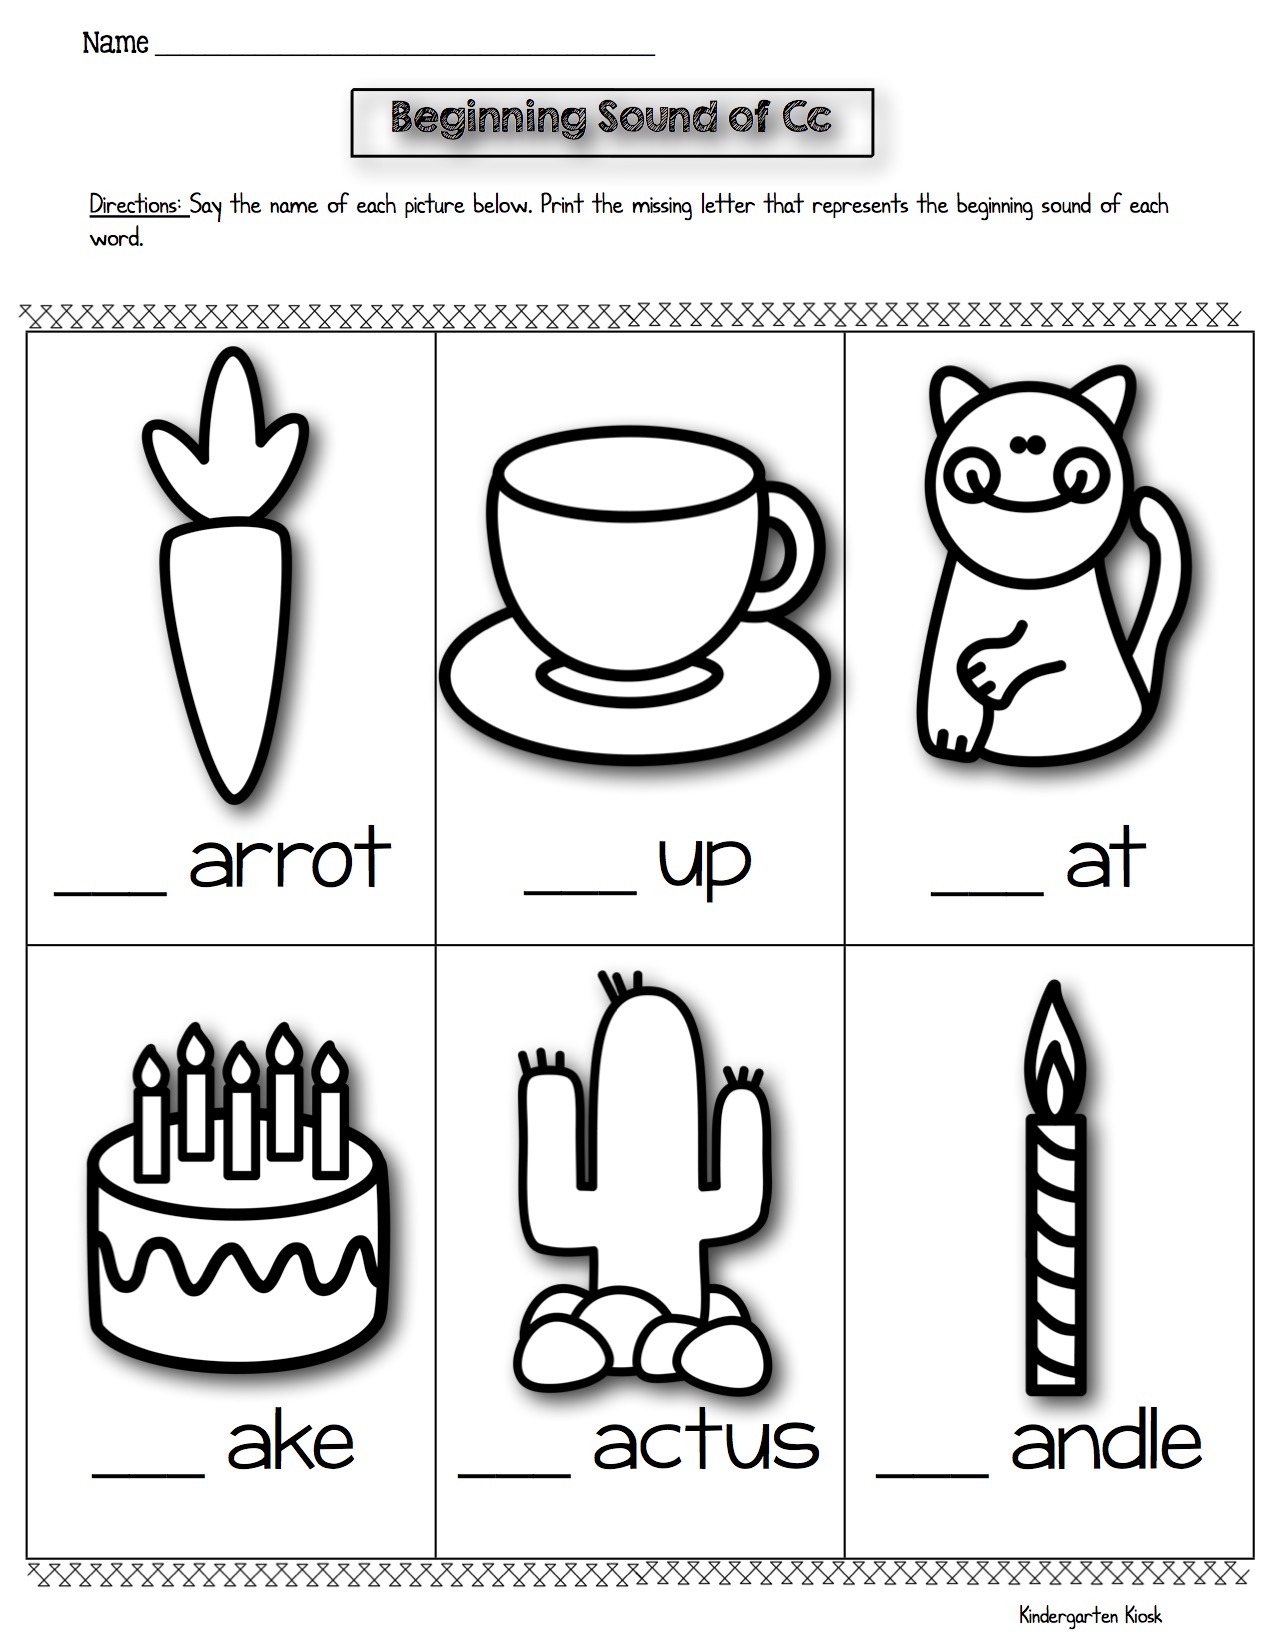 phonics-prep-alphabet-worksheets-kindergarten-kiosk